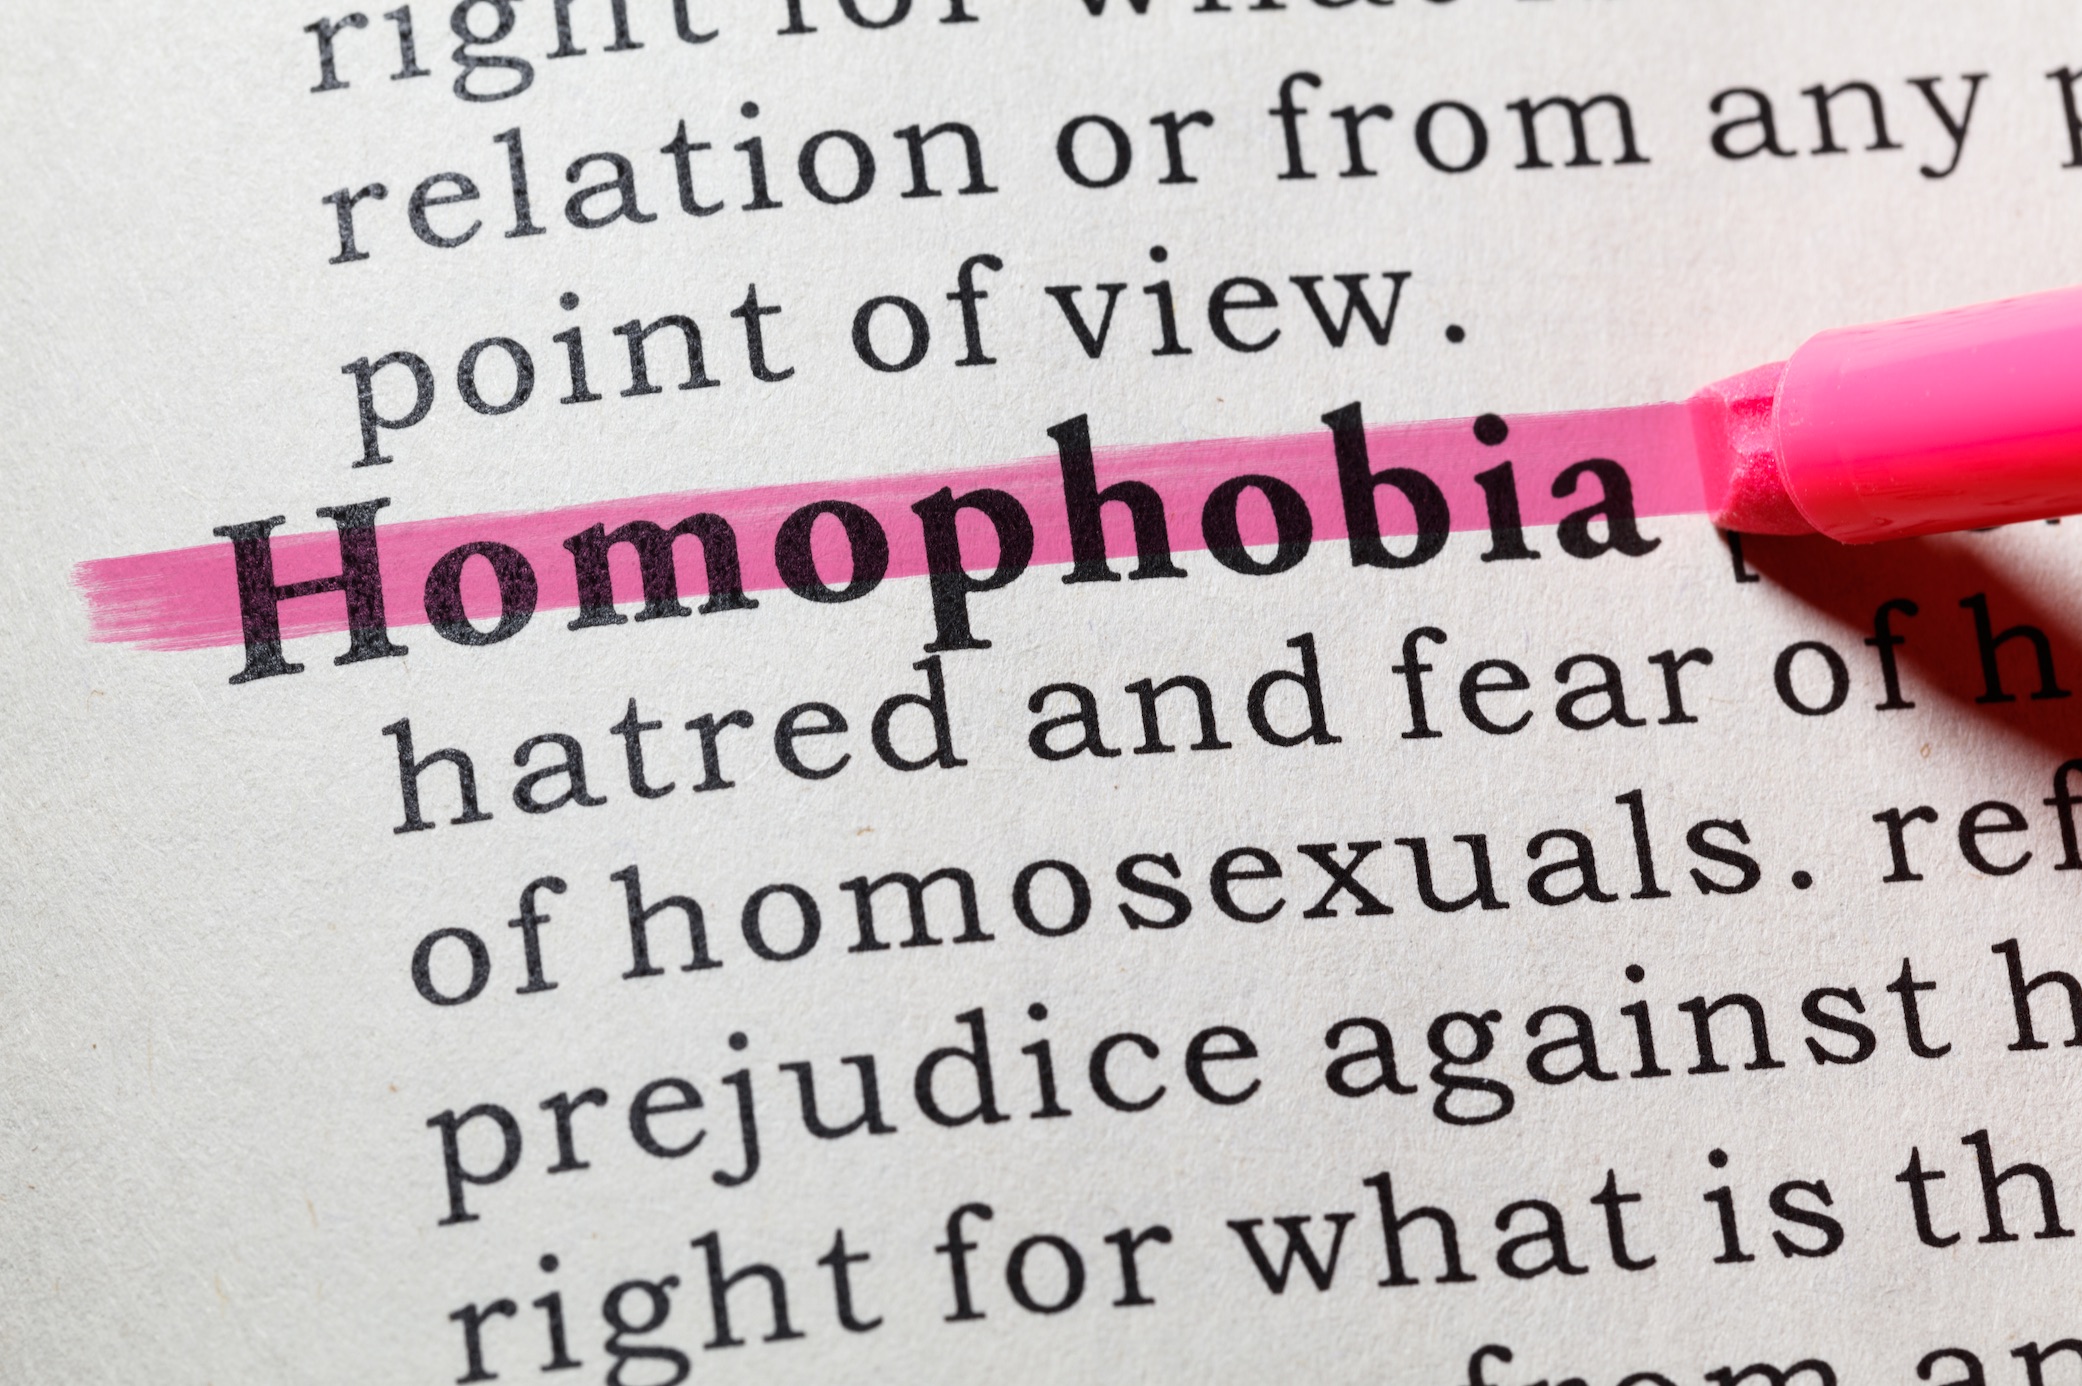 How to avoid homophobia and transphobia - Philadelphia Gay News